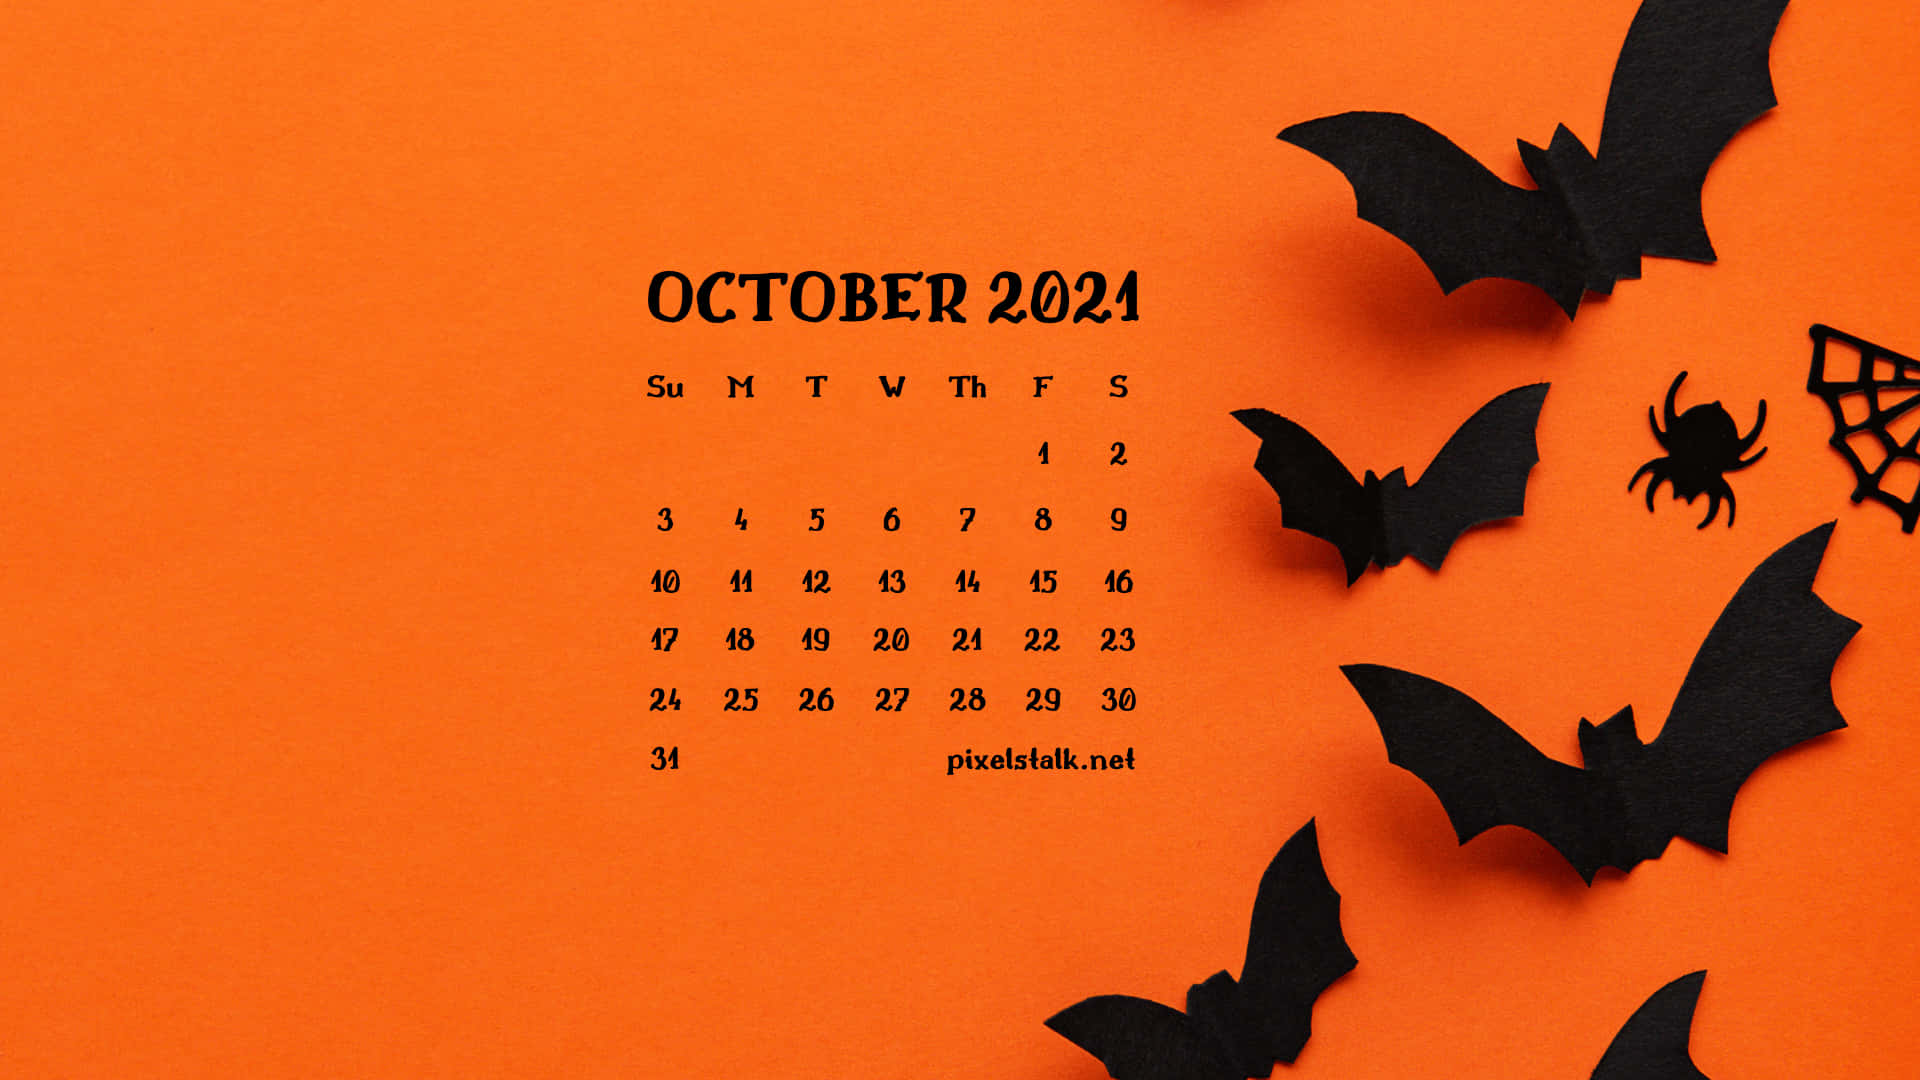 October 2021 calendar Wallpaper